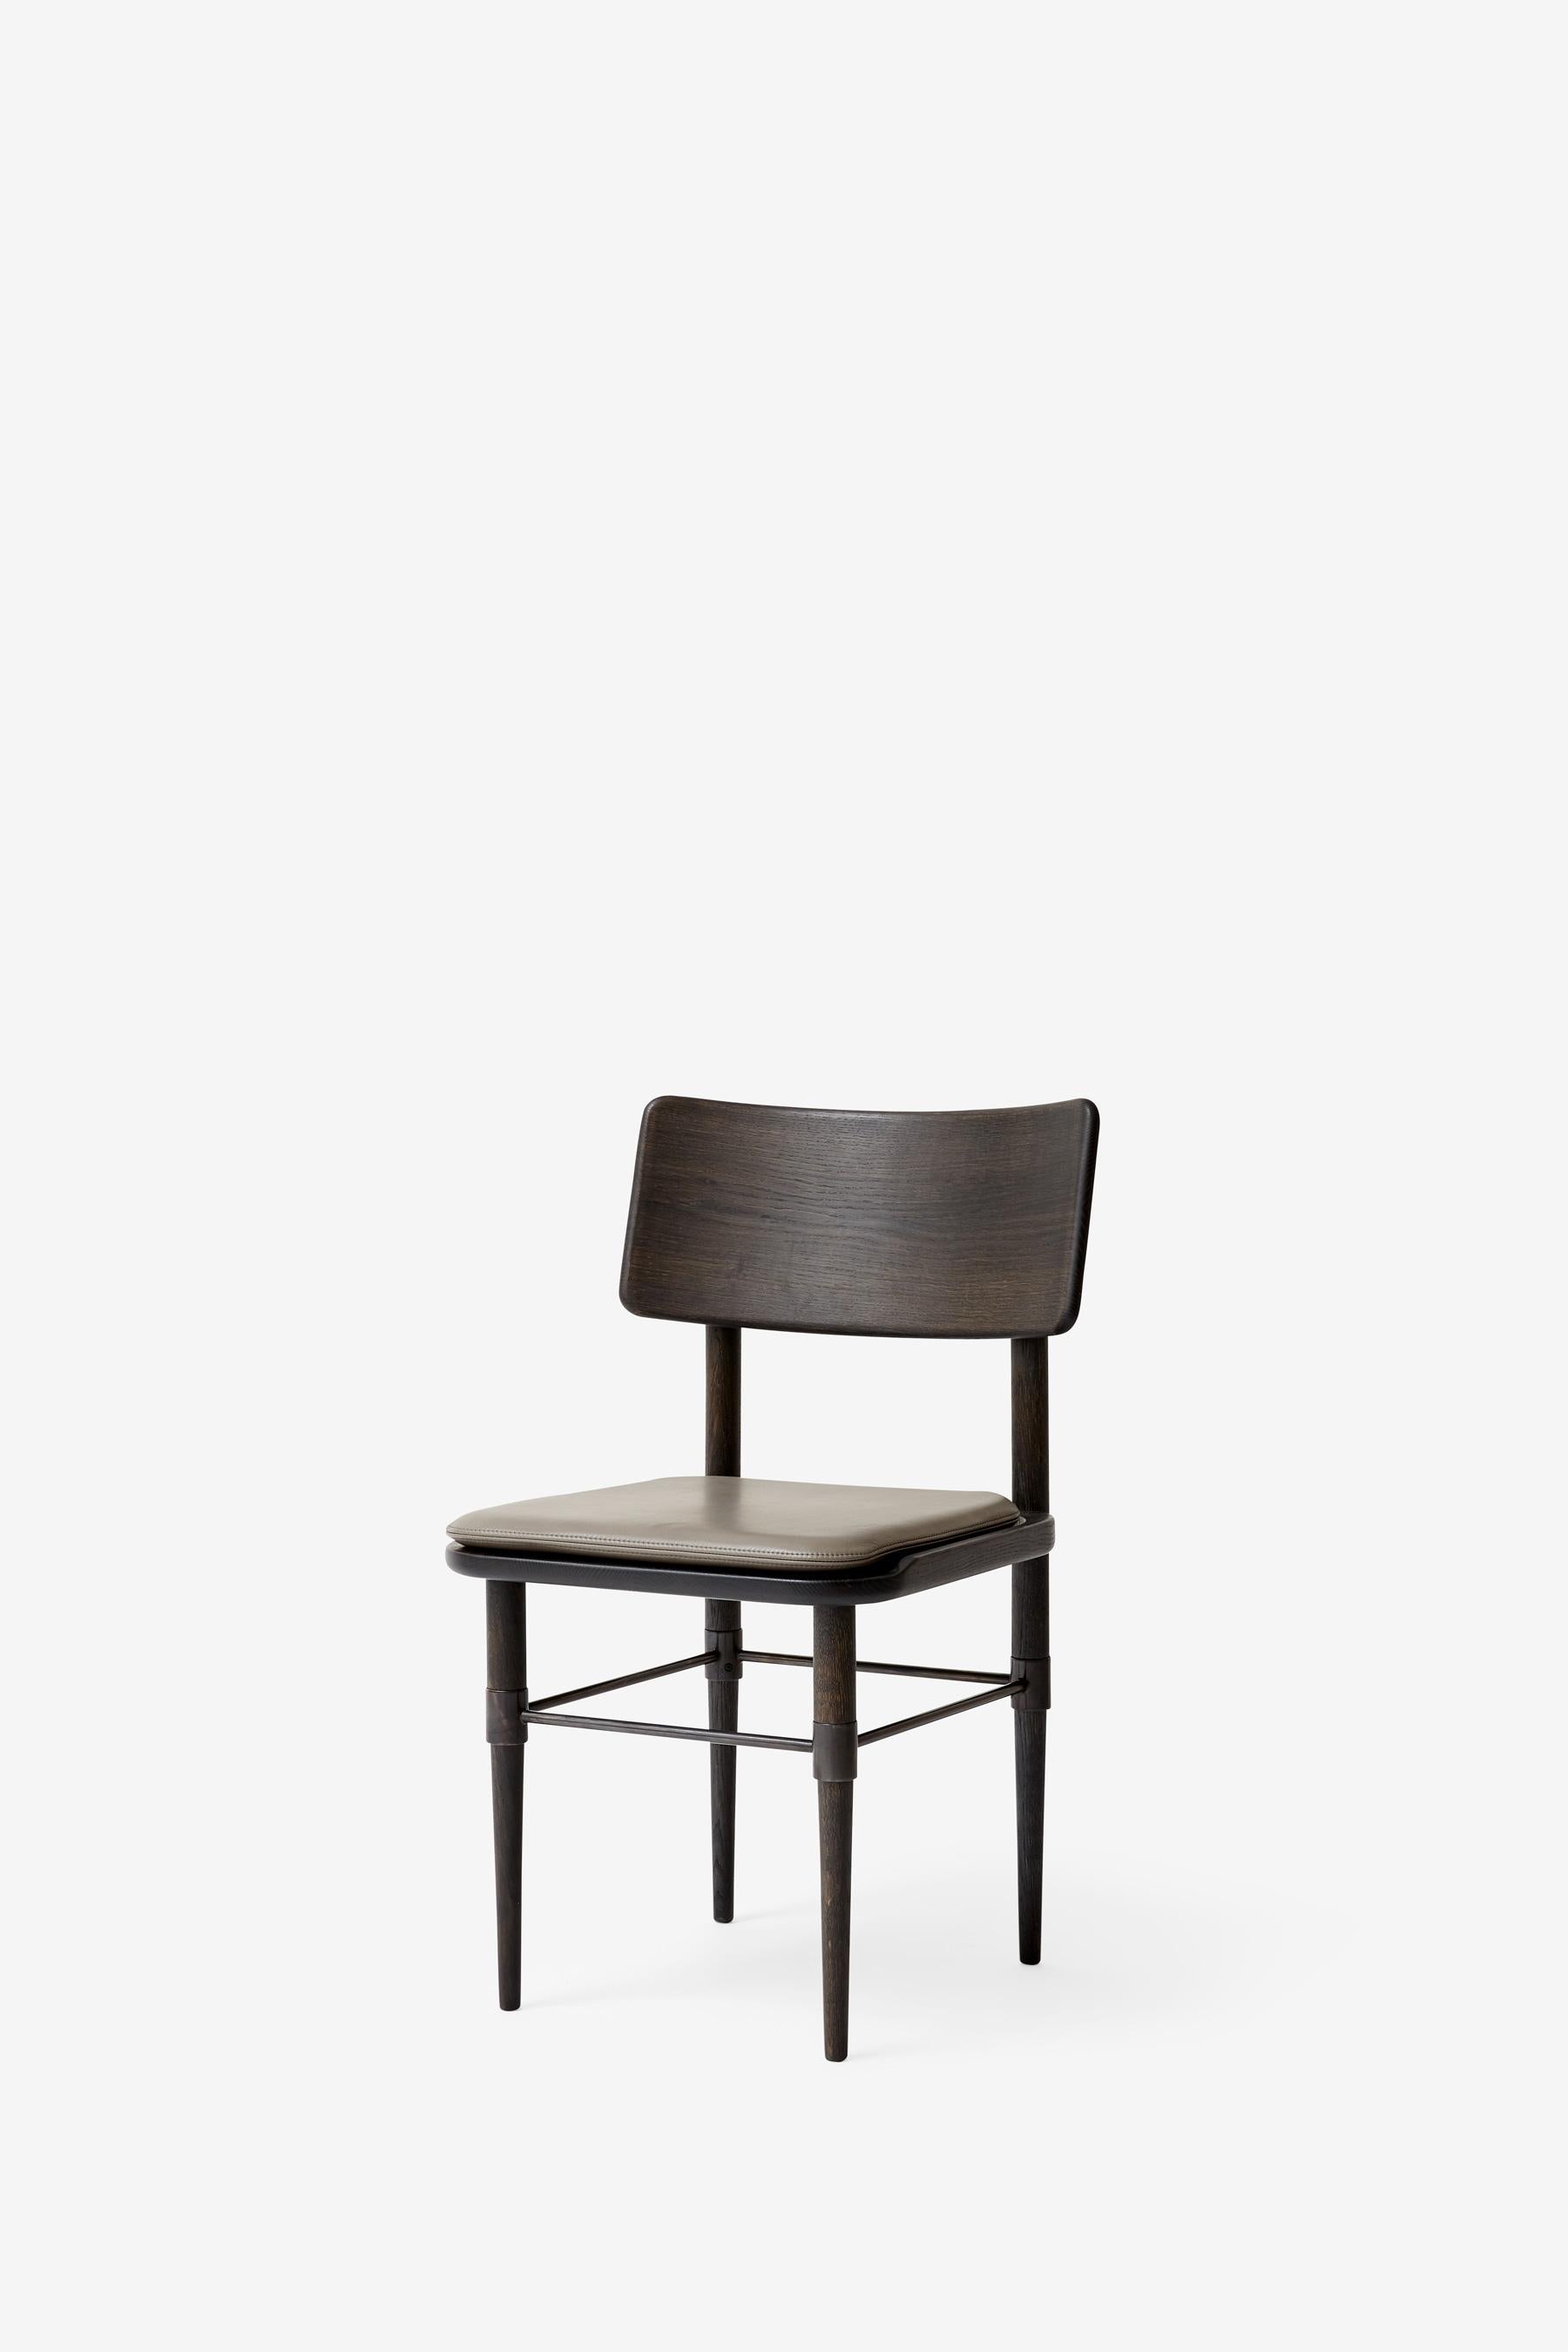 MG101 Dining chair in dark oak by Malte Gormsen Design by Space Copenhagen For Sale 3